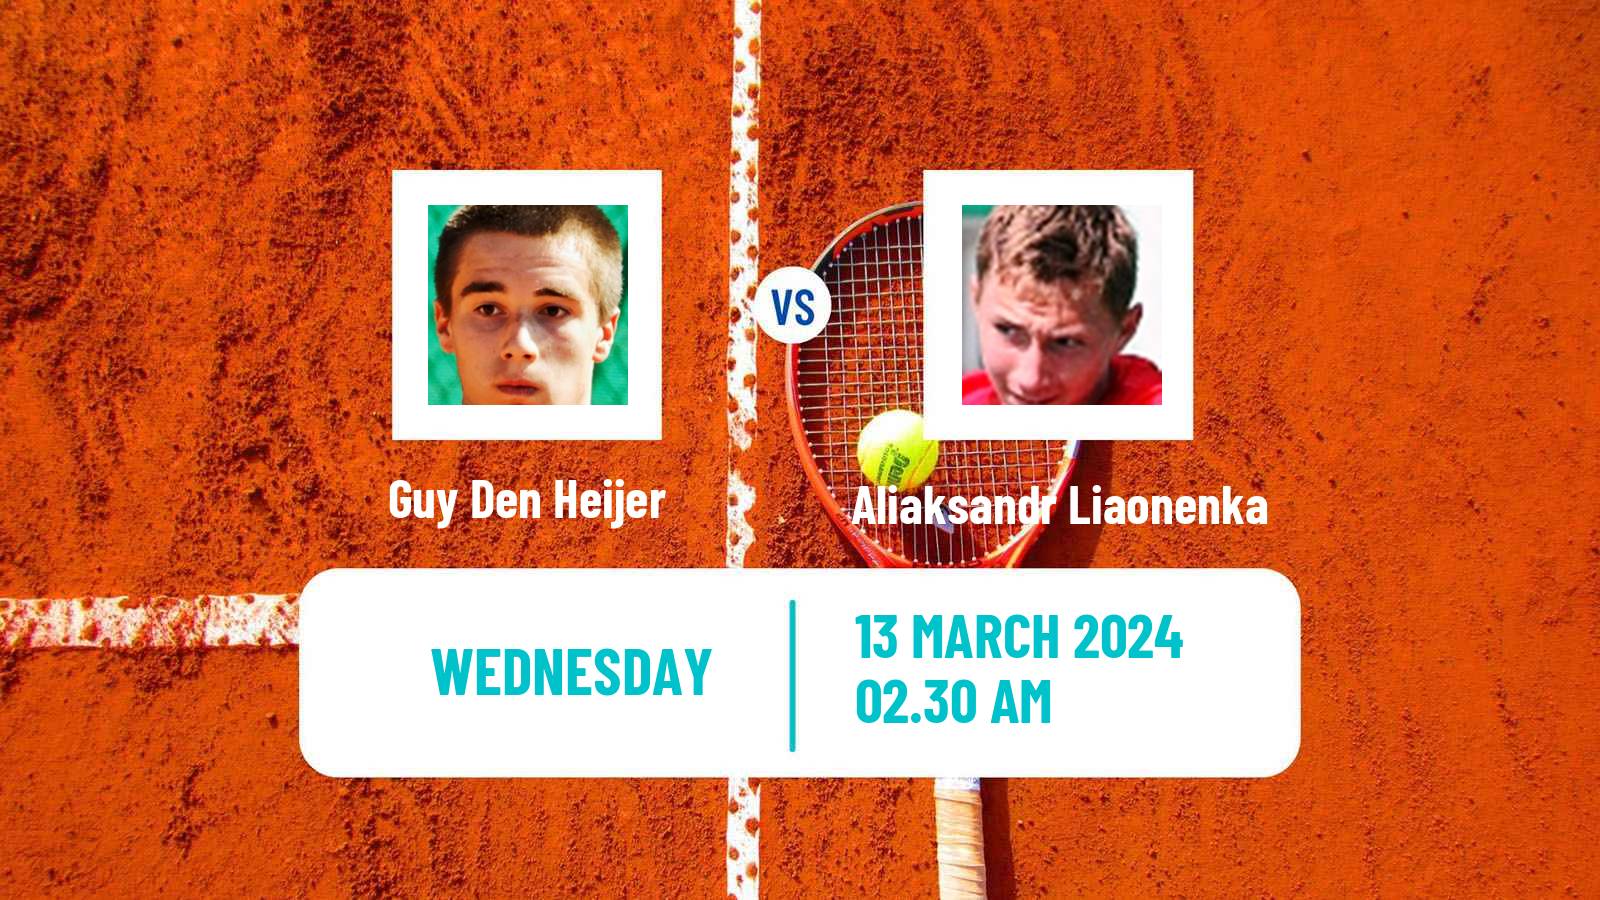 Tennis ITF M15 Aktobe 2 Men Guy Den Heijer - Aliaksandr Liaonenka